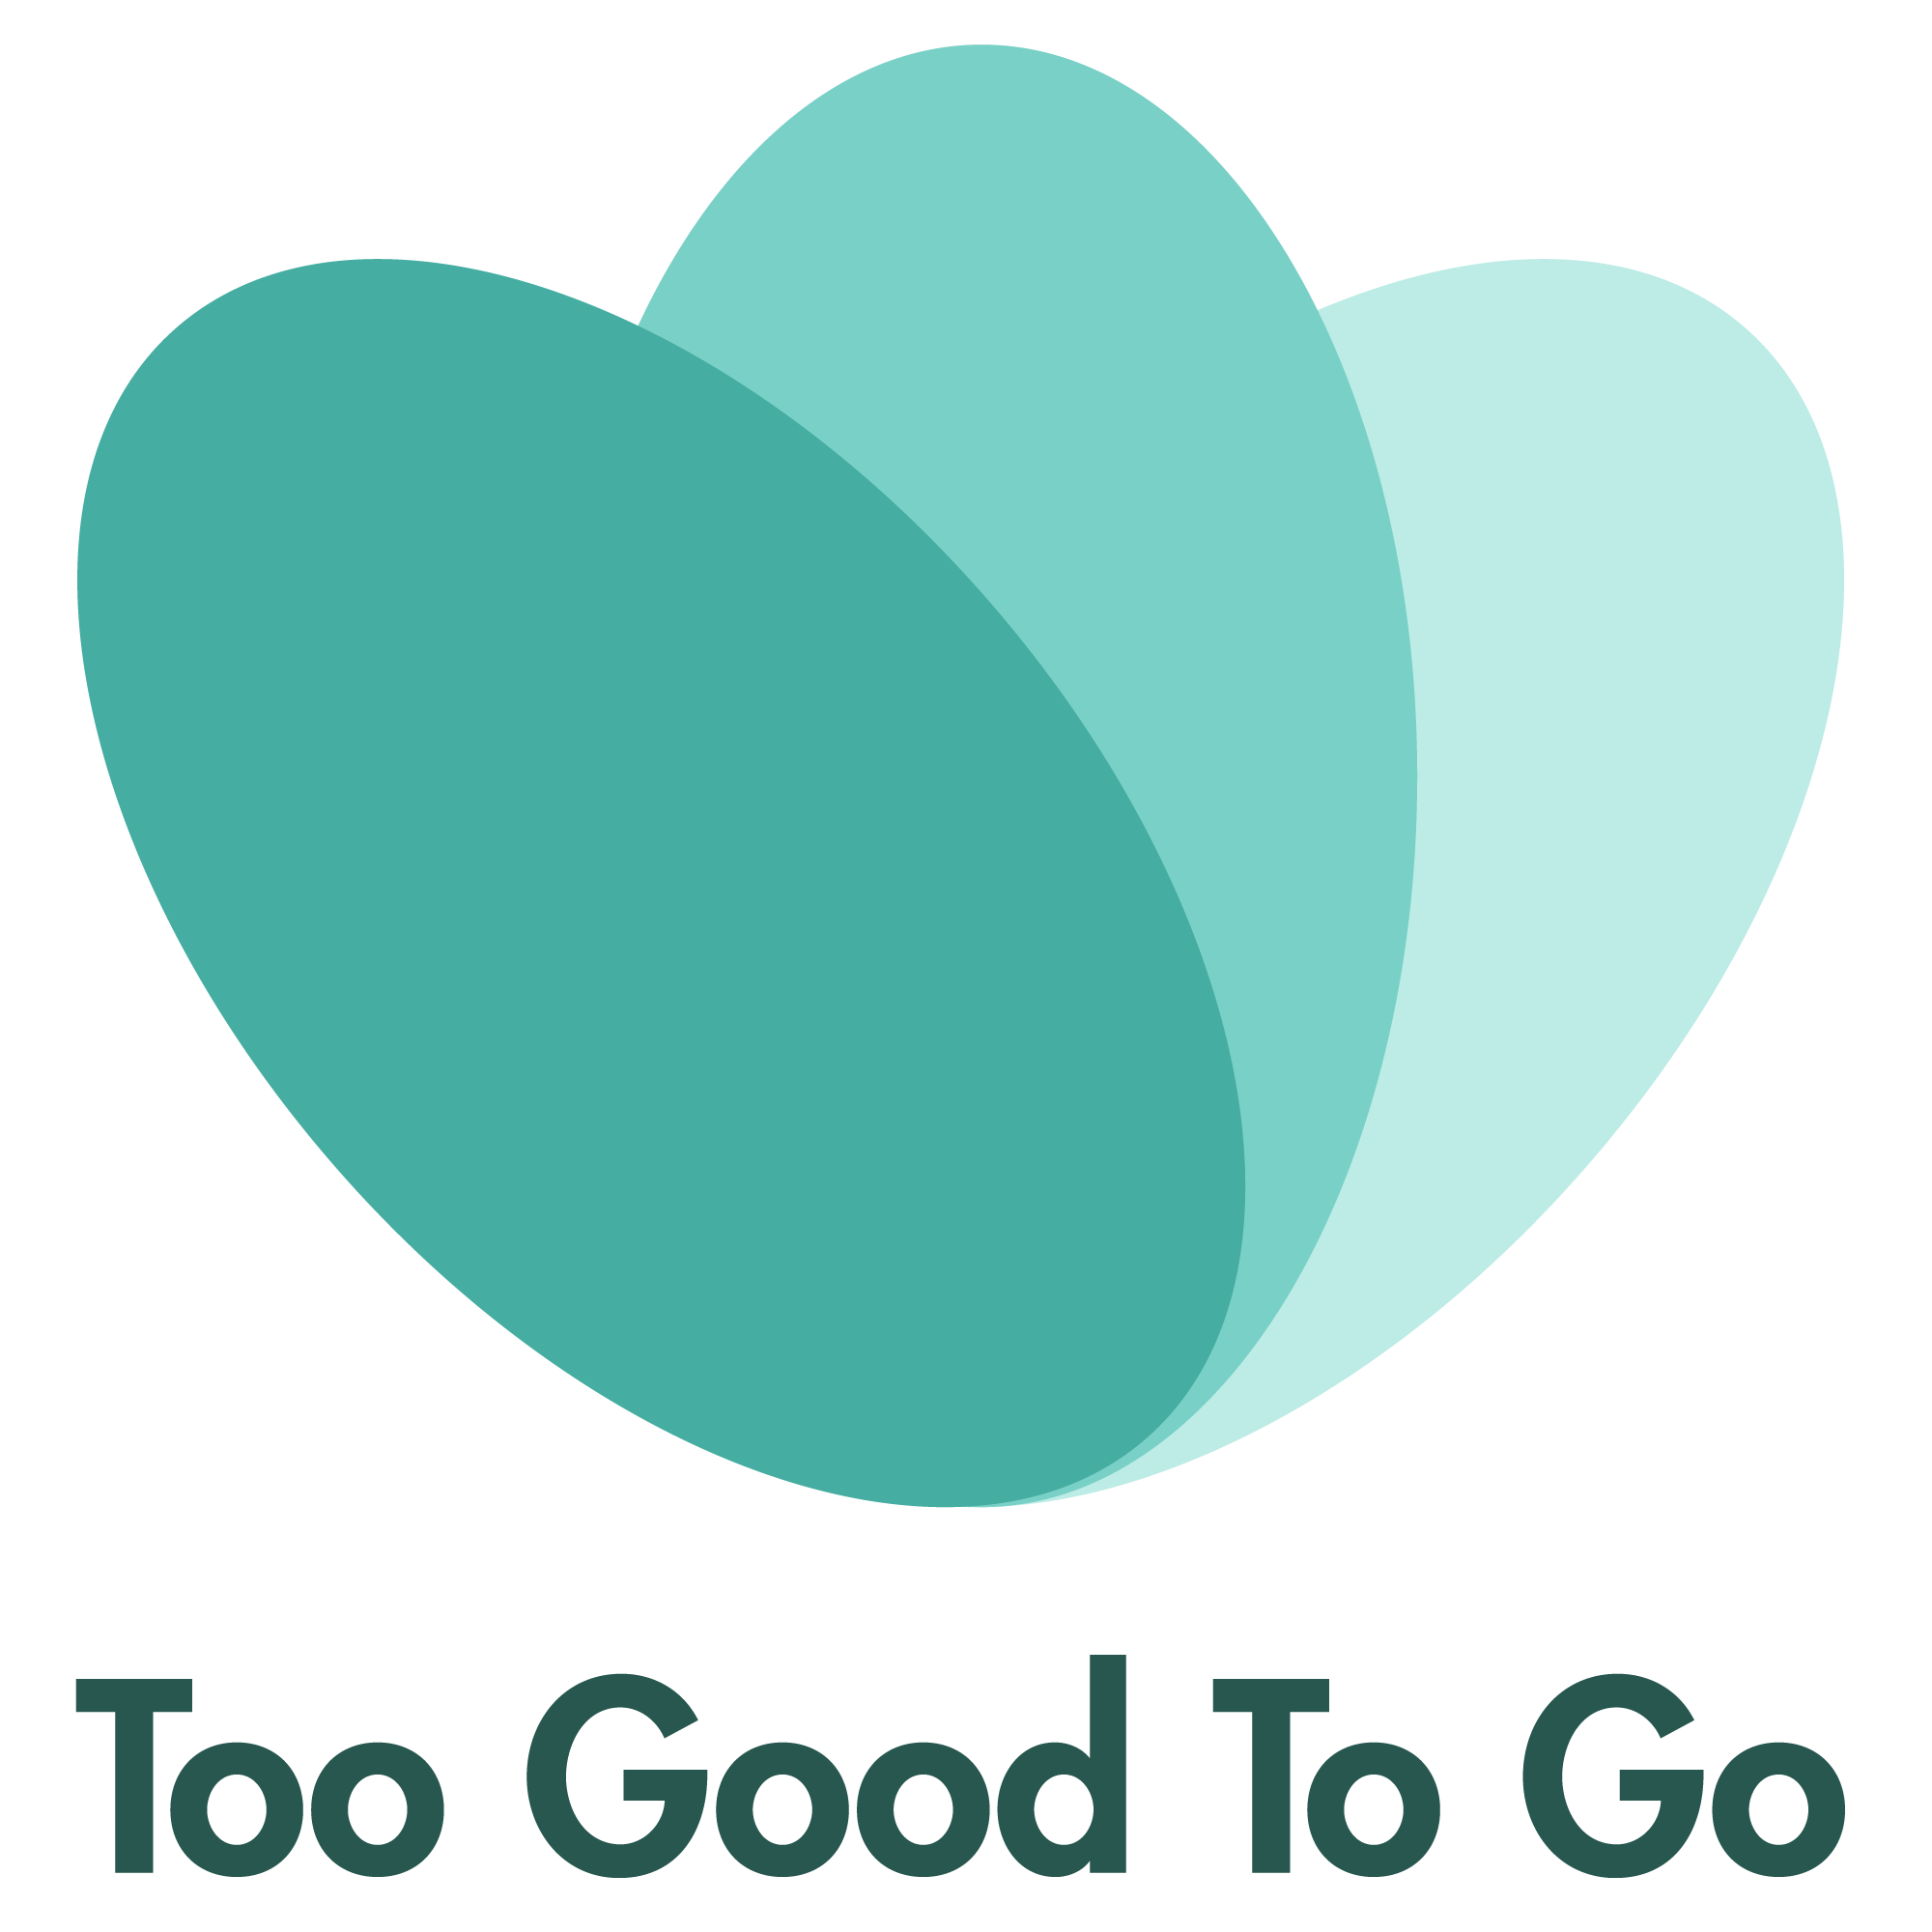 Too Good To Go company profile & job openings — ClimateTechList